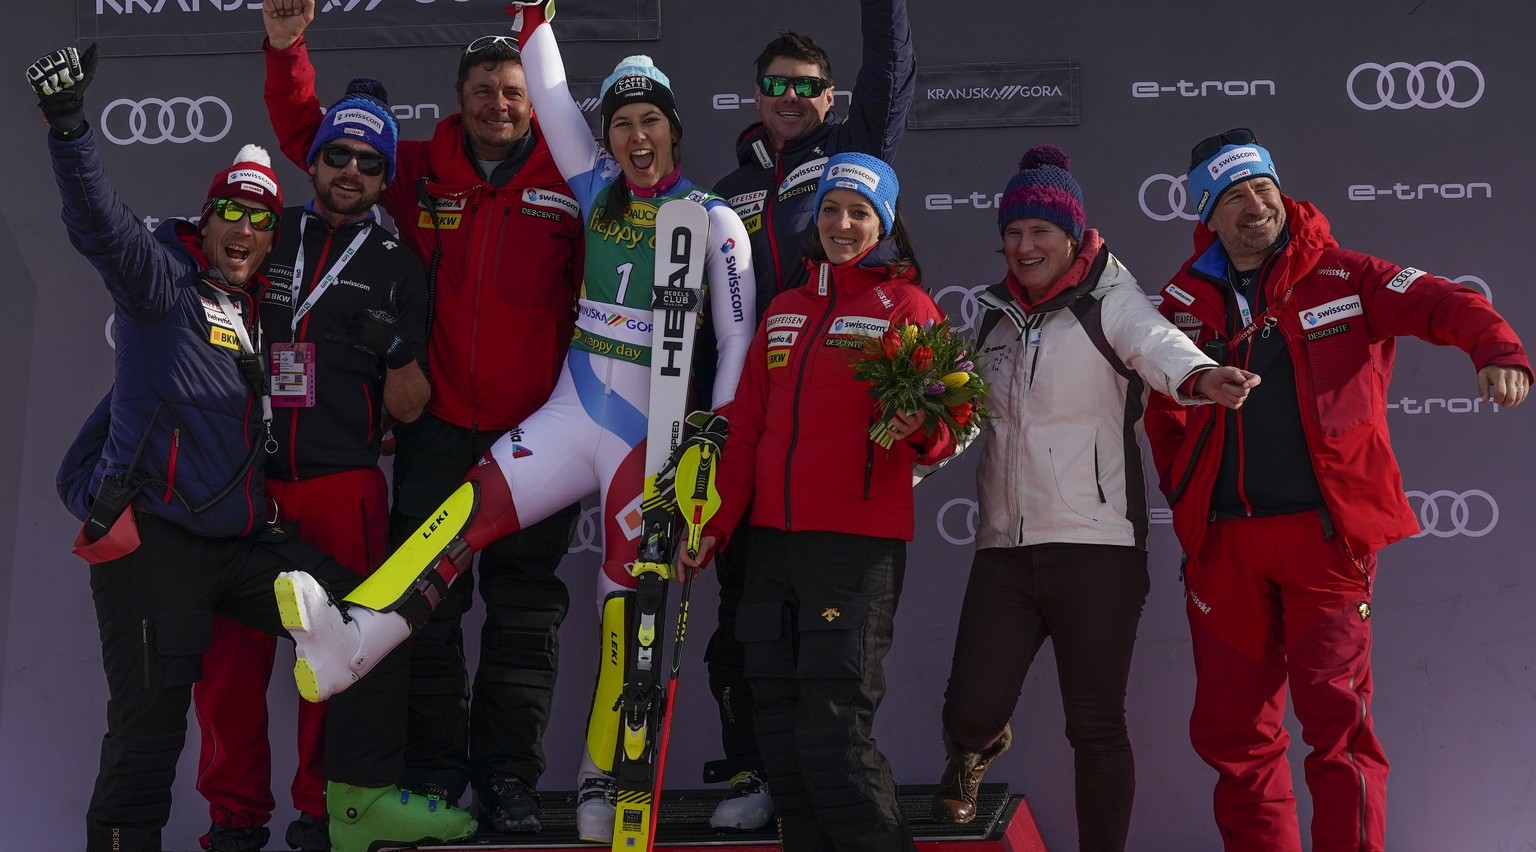 Switzerland&#039;s Wendy Holdener celebrates after finishing second in a alpine ski, women&#039;s World Cup slalom in Kranjska Gora, Slovenia, Sunday, Feb. 16, 2020. (AP Photo/Giovanni Auletta)